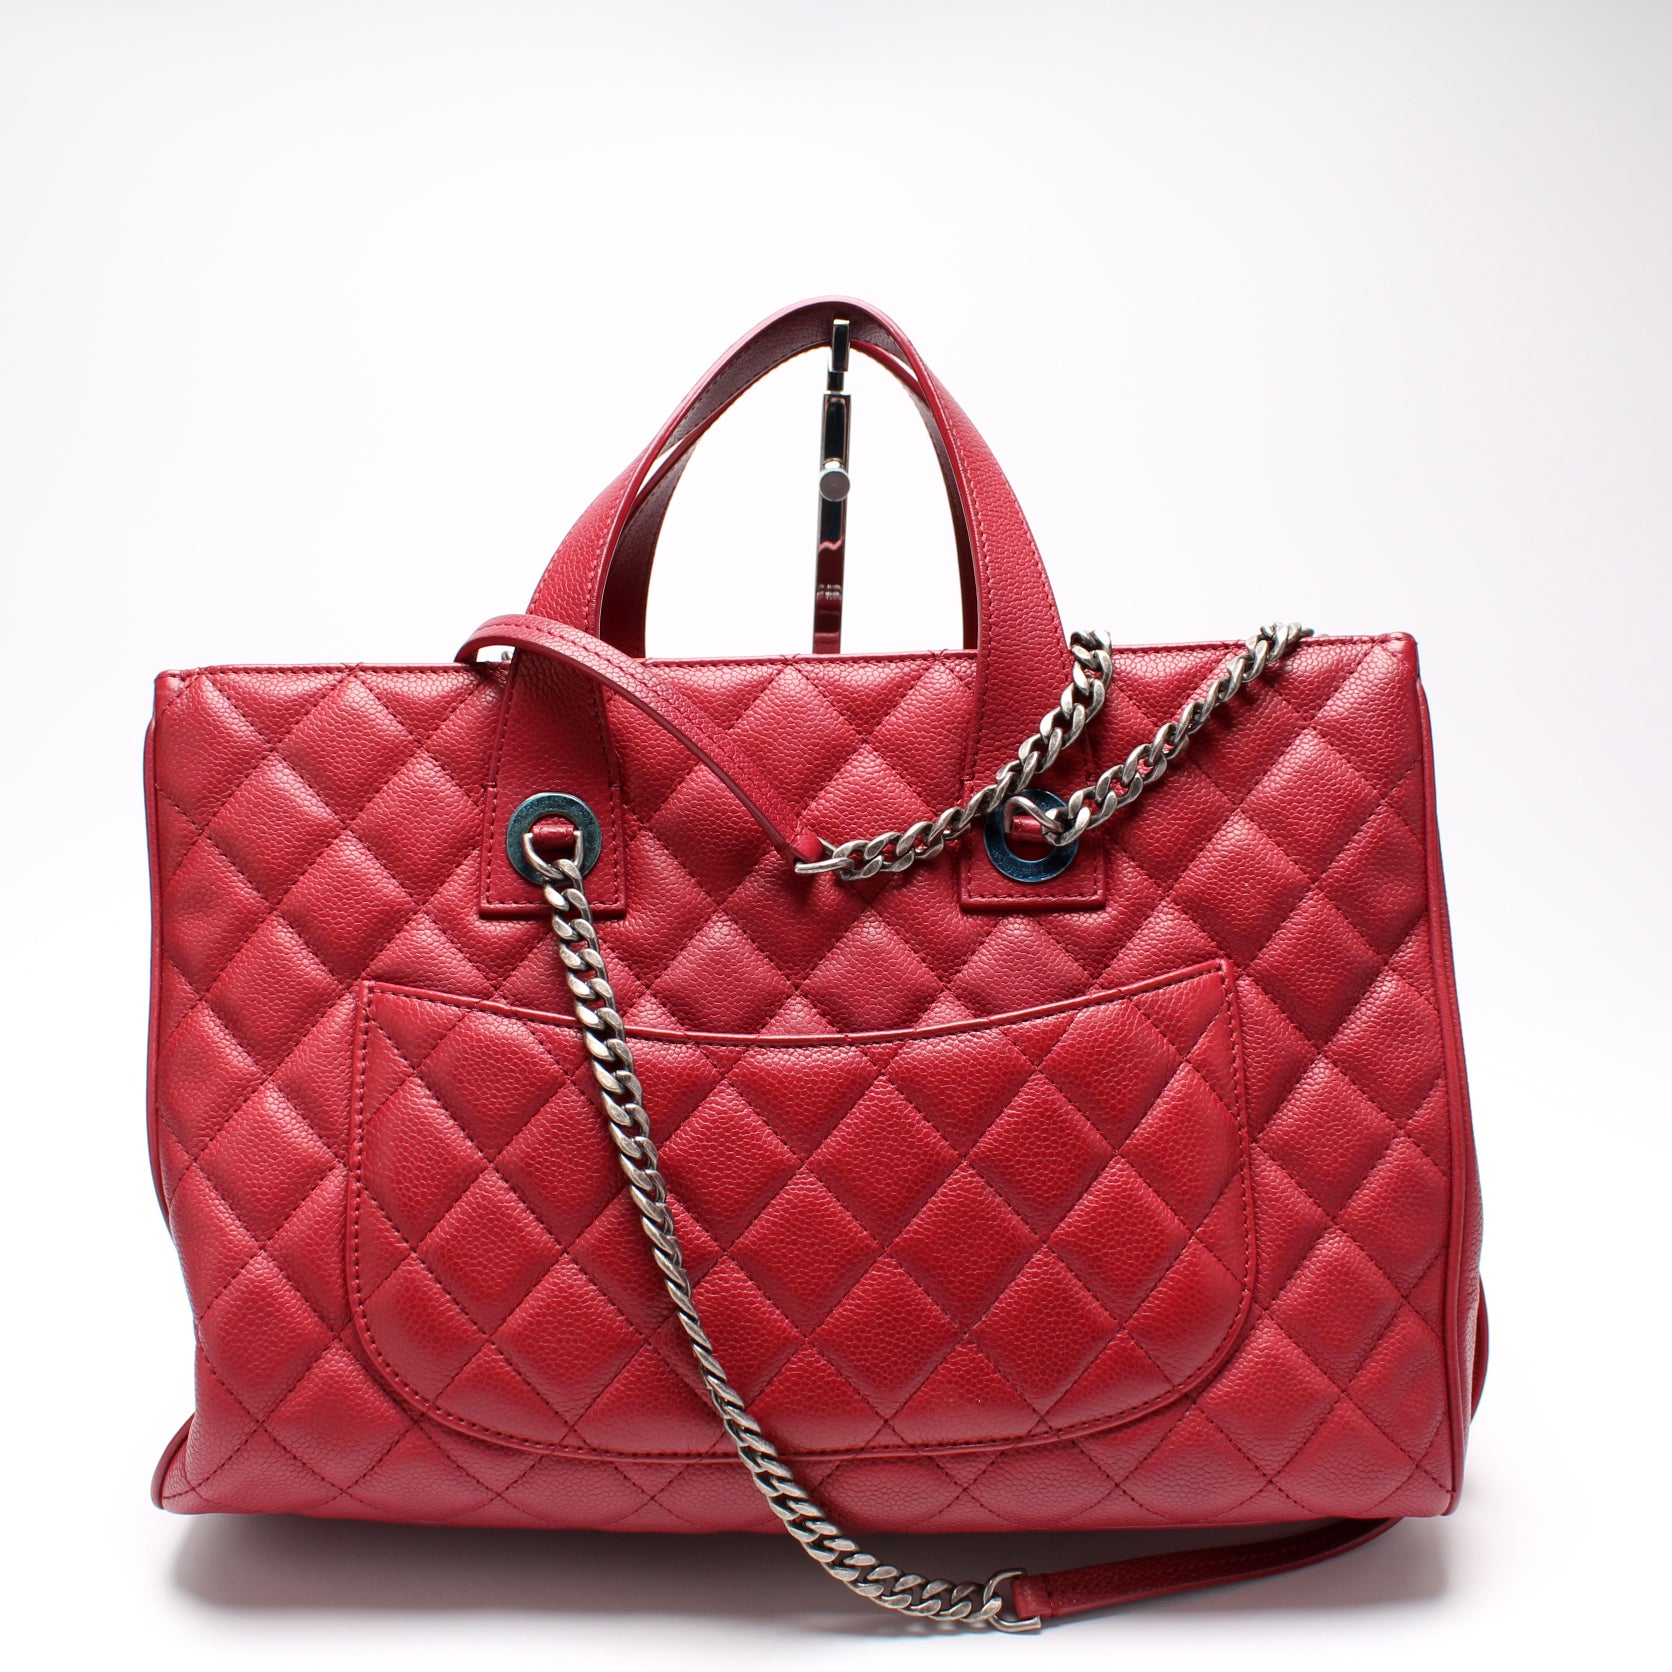 CHANEL CHANEL Caviar Large Bags & Handbags for Women